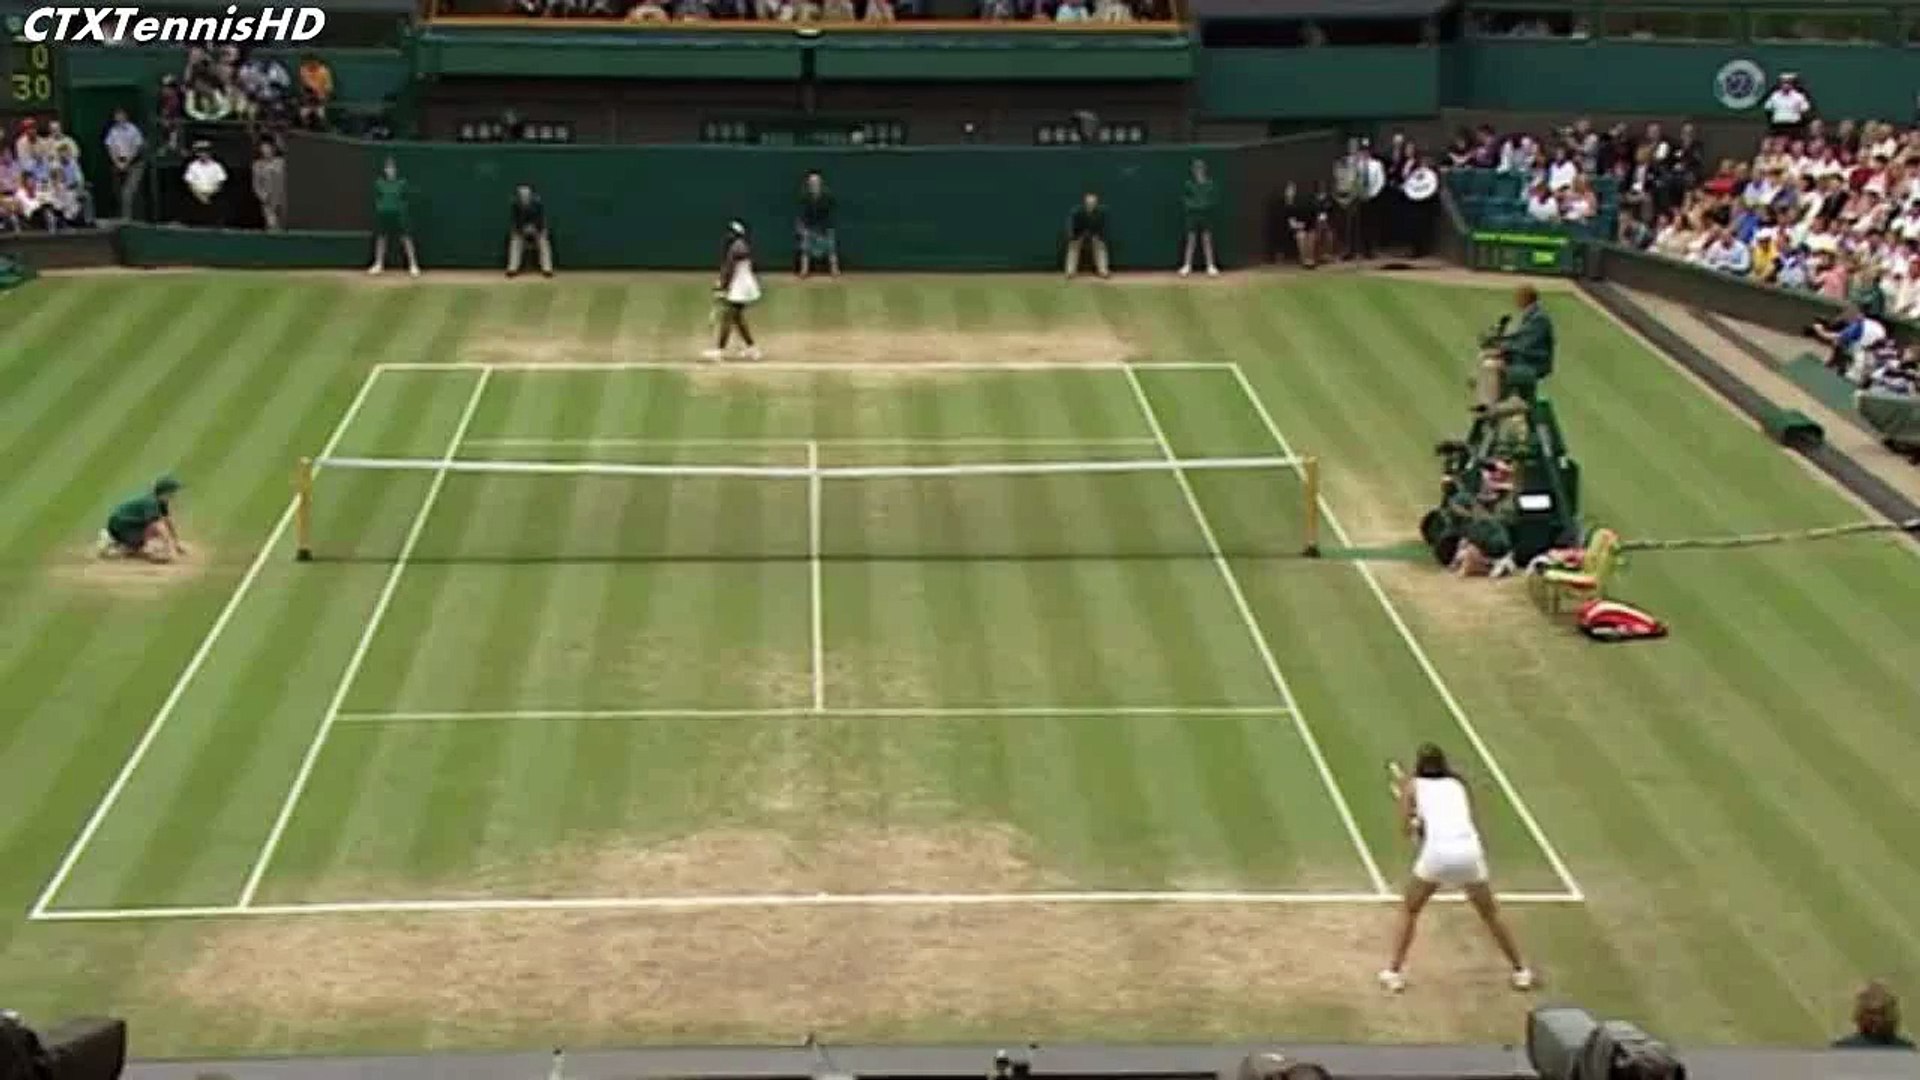 Venus vs Davenport 2005 Wimbledon Highlights